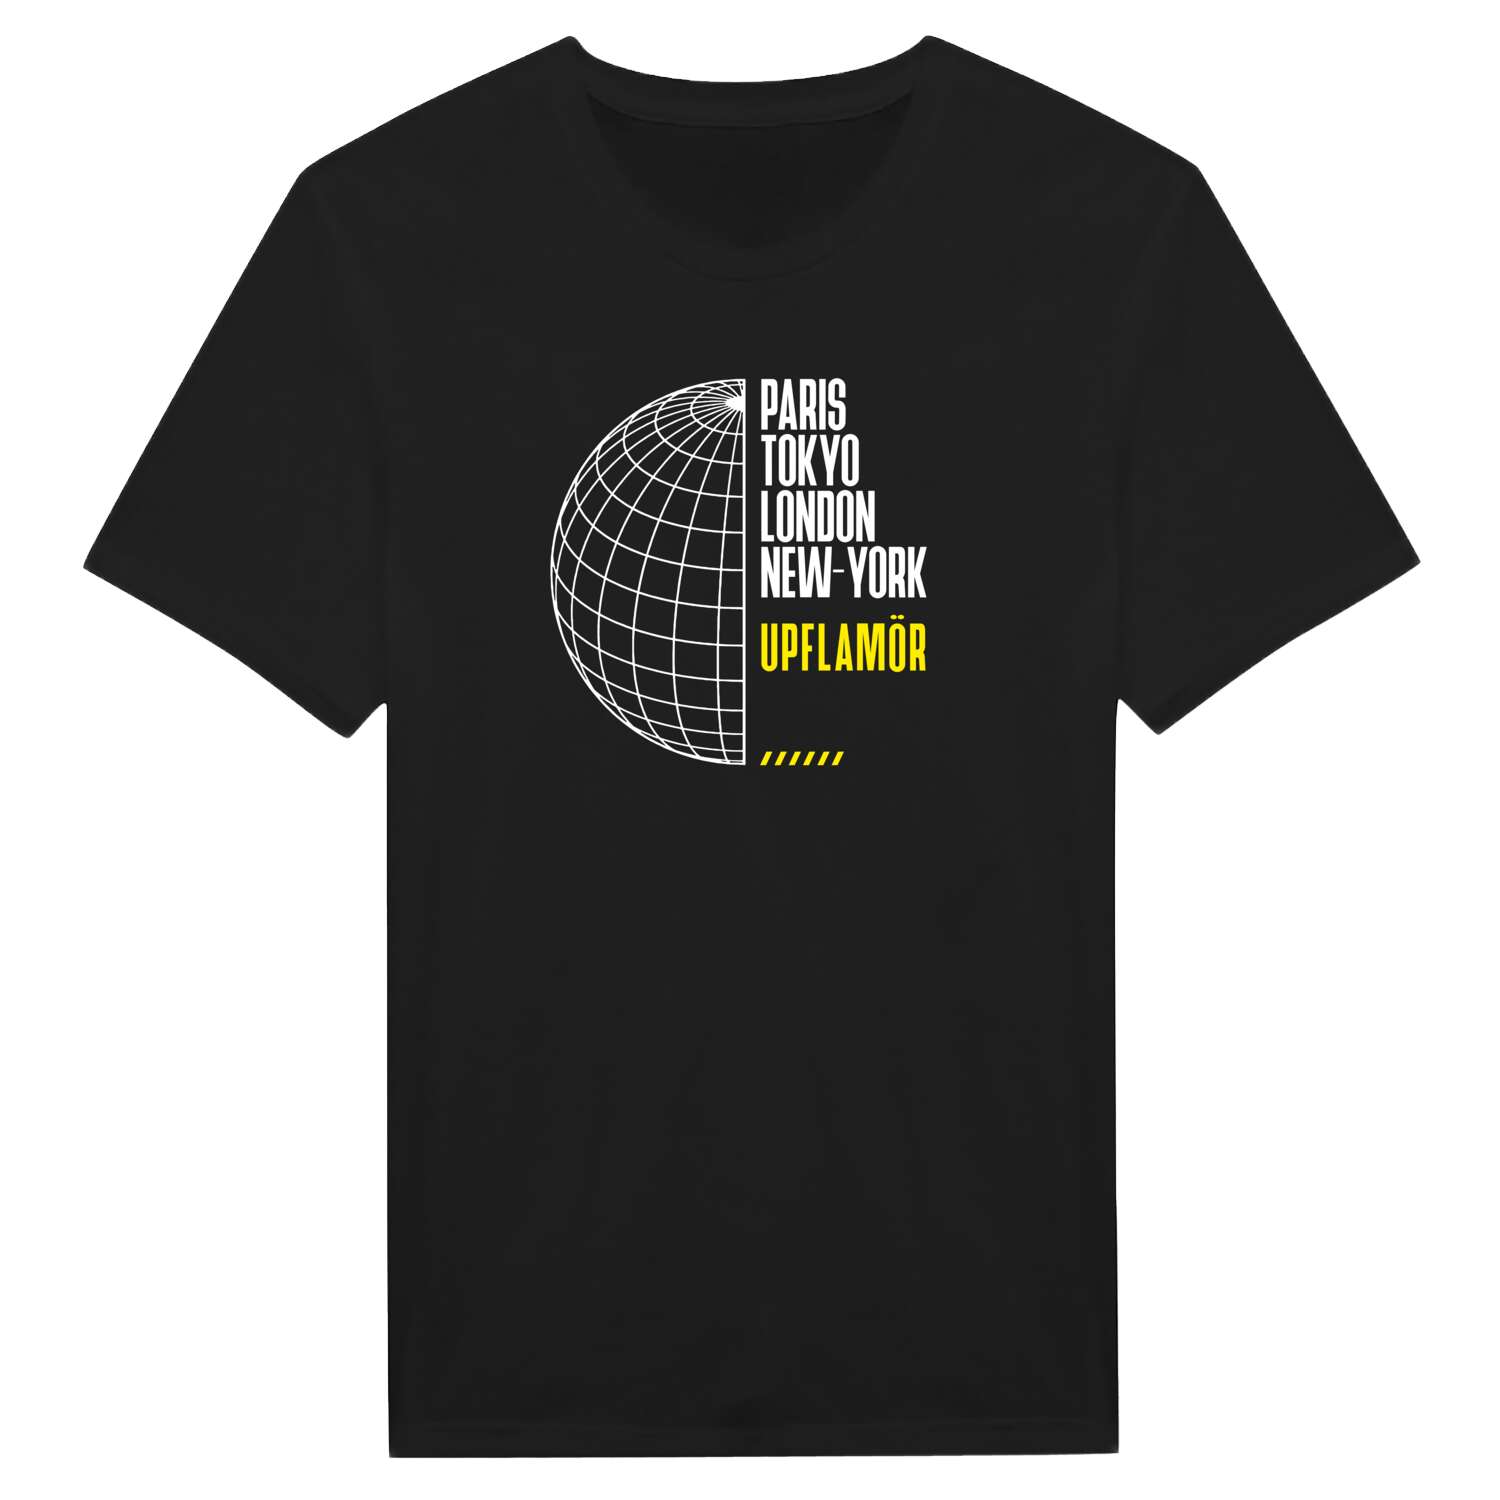 Upflamör T-Shirt »Paris Tokyo London«